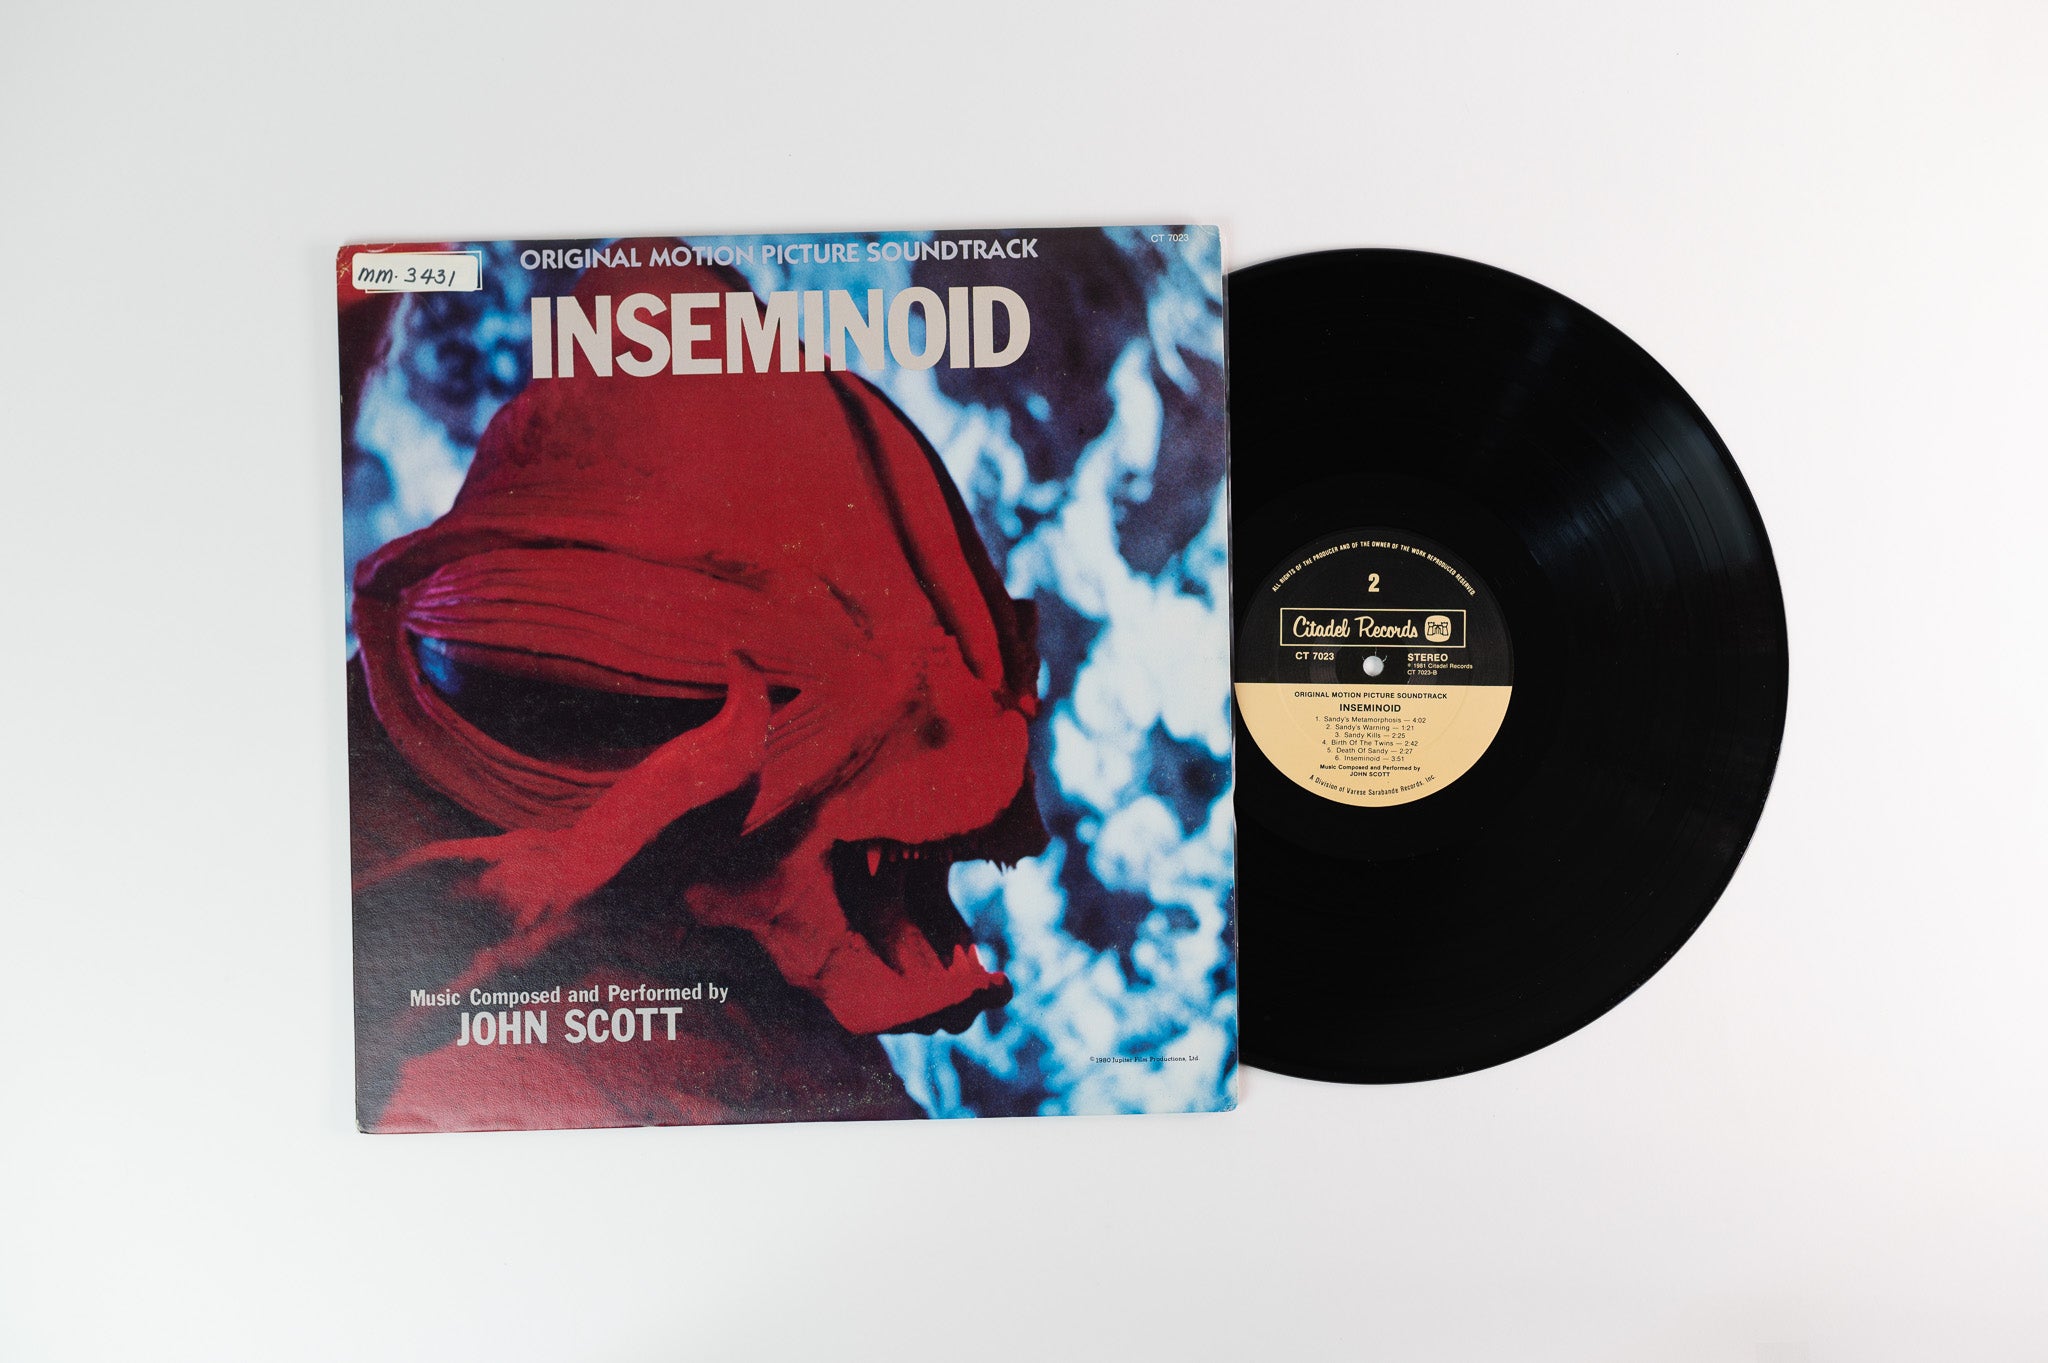 John Scott - Inseminoid (Original Motion Picture Soundtrack) on Citadel